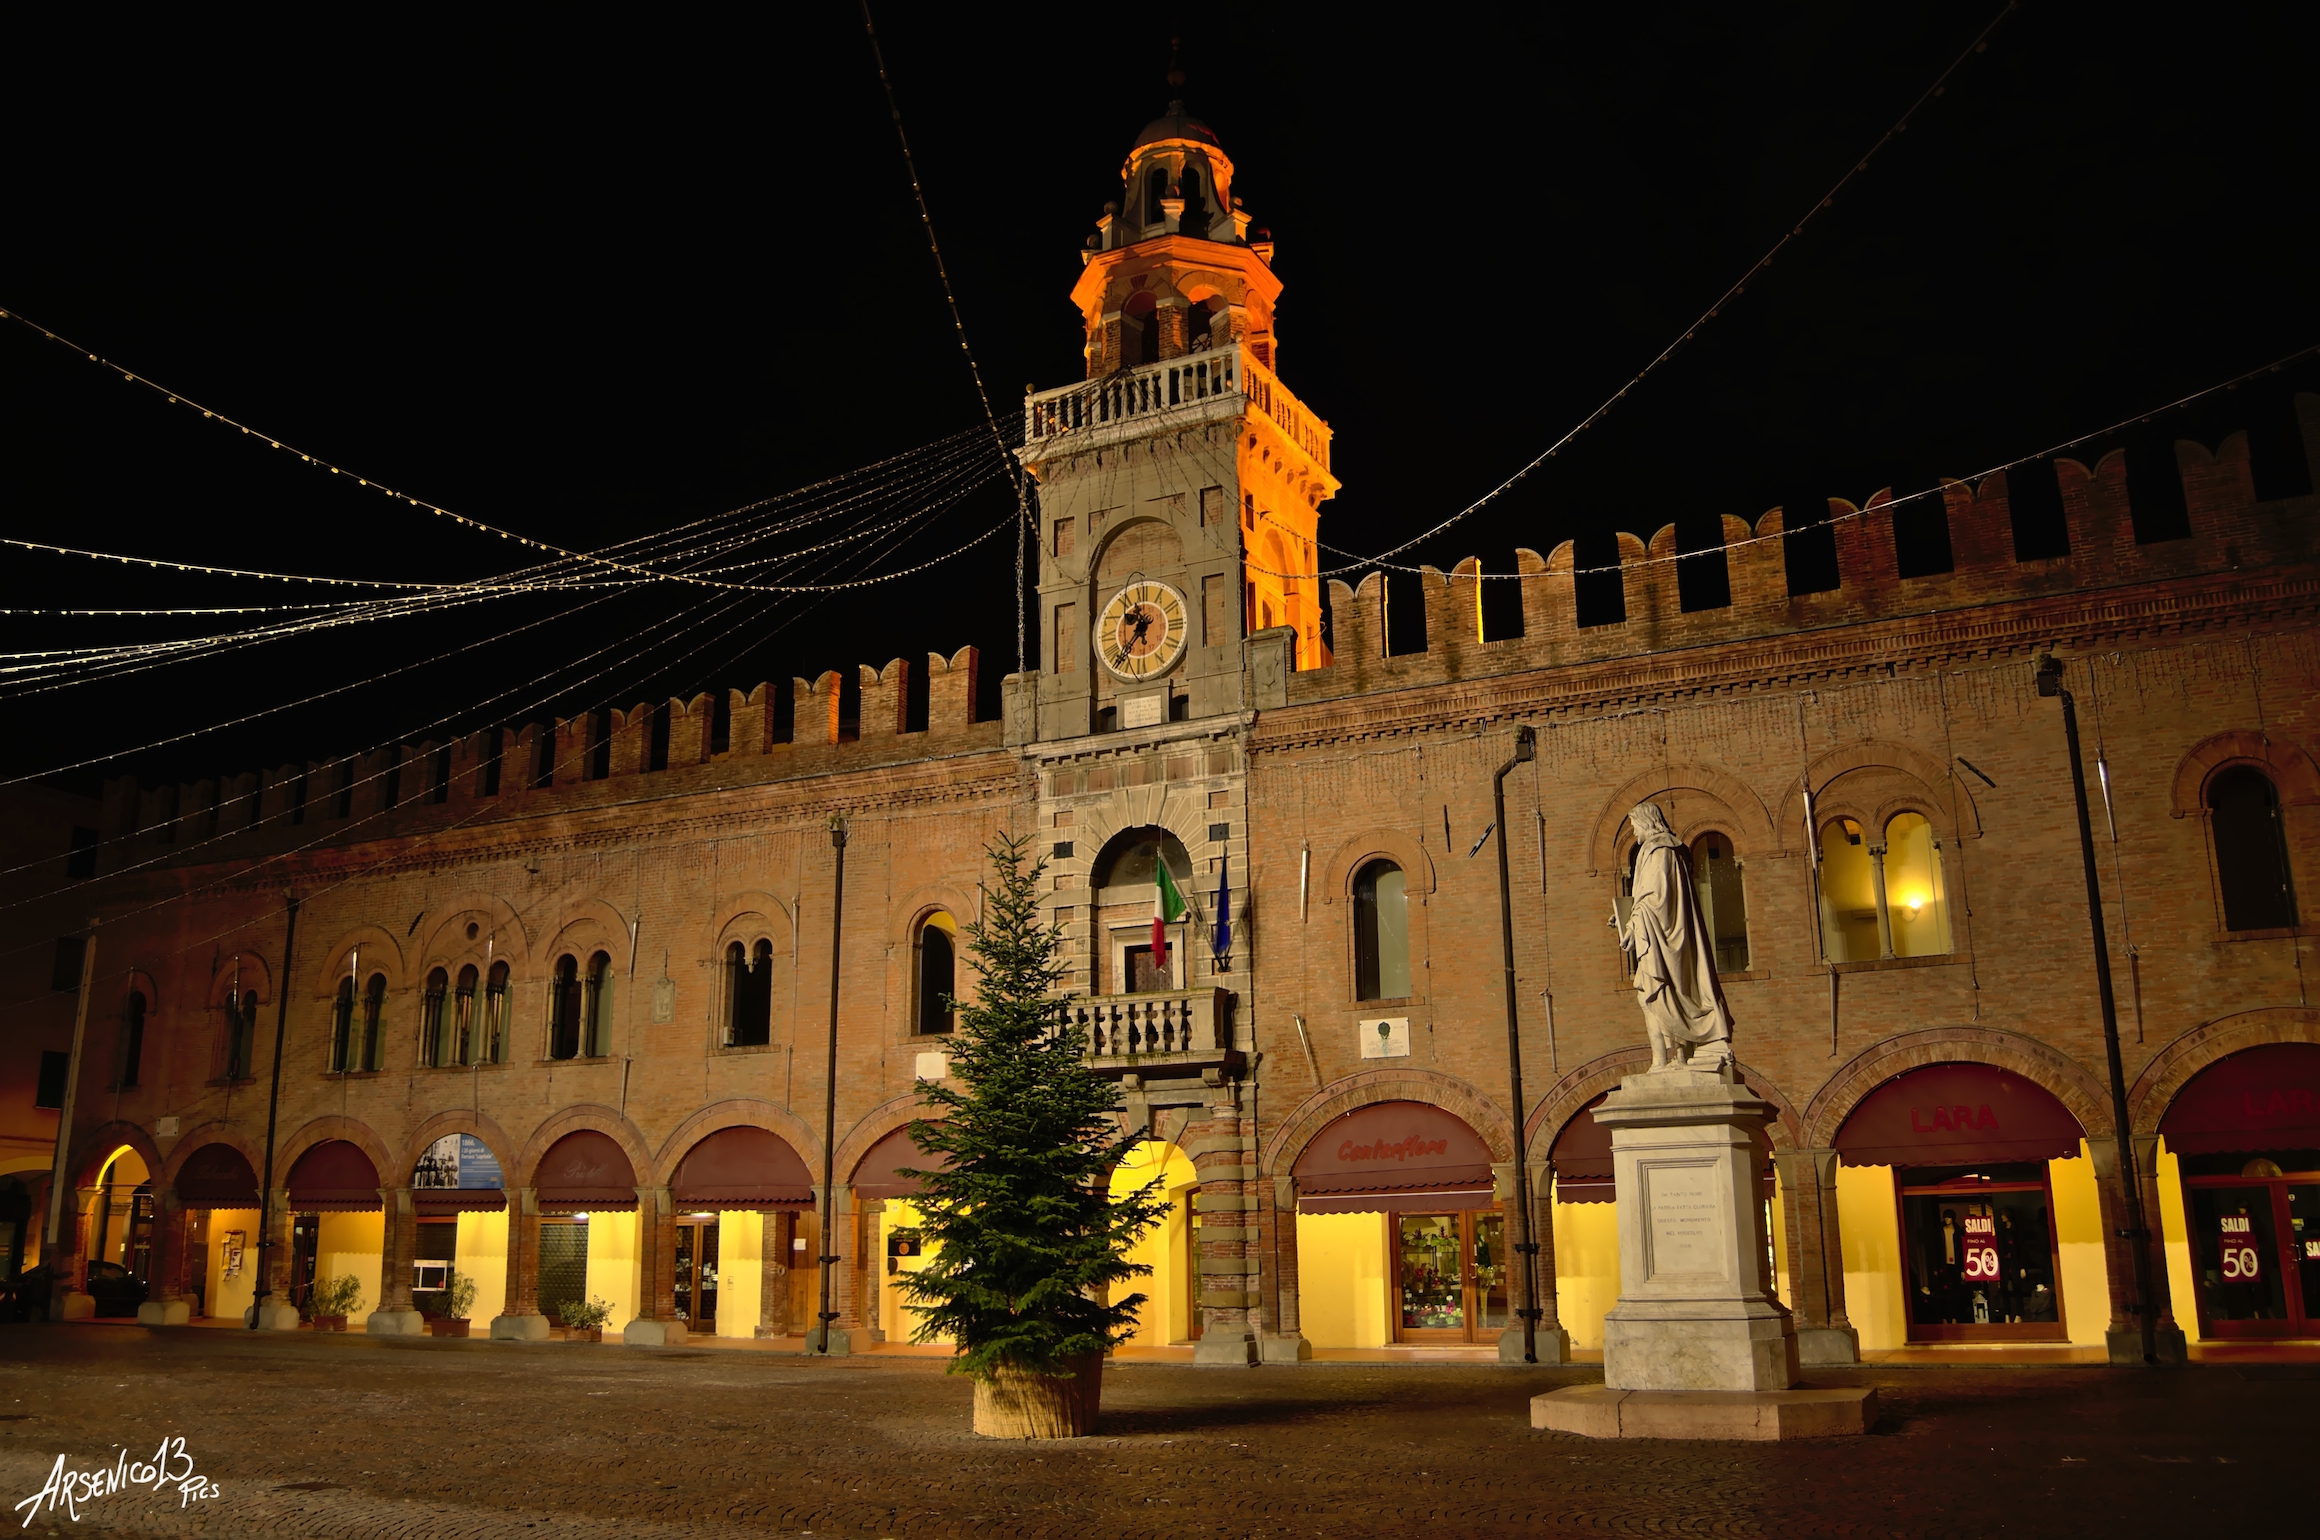 Palazzo del Governatore - Cento, Italy by Arsenico13 on DeviantArt